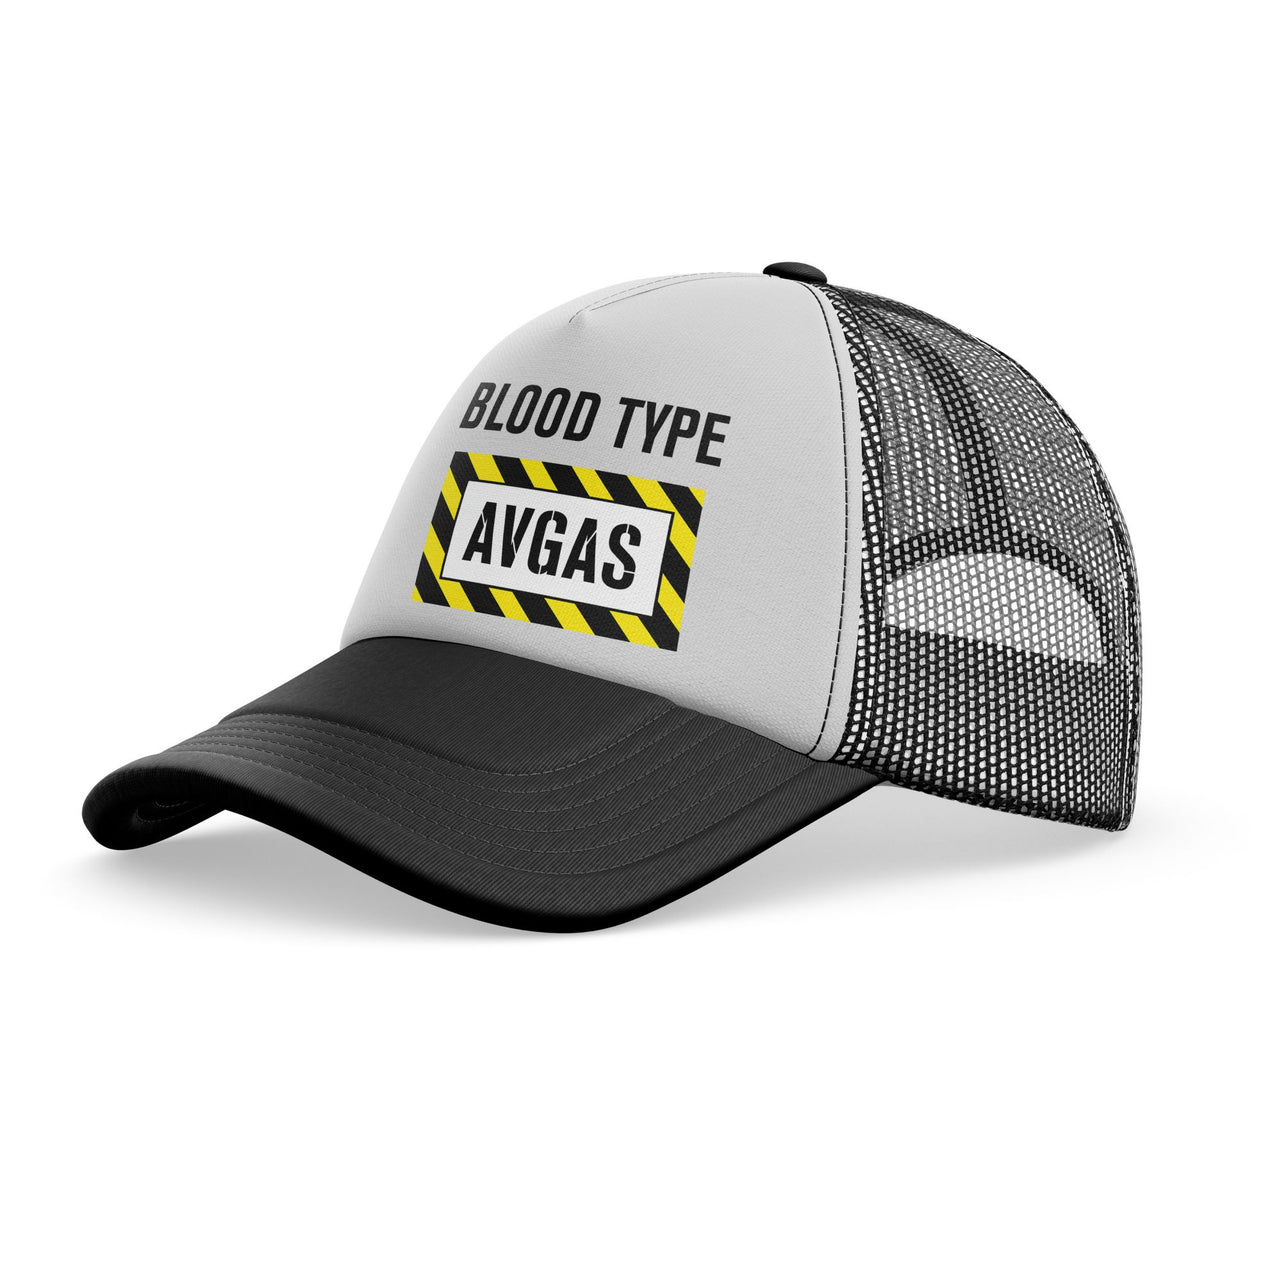 Blood Type AVGAS Designed Trucker Caps & Hats